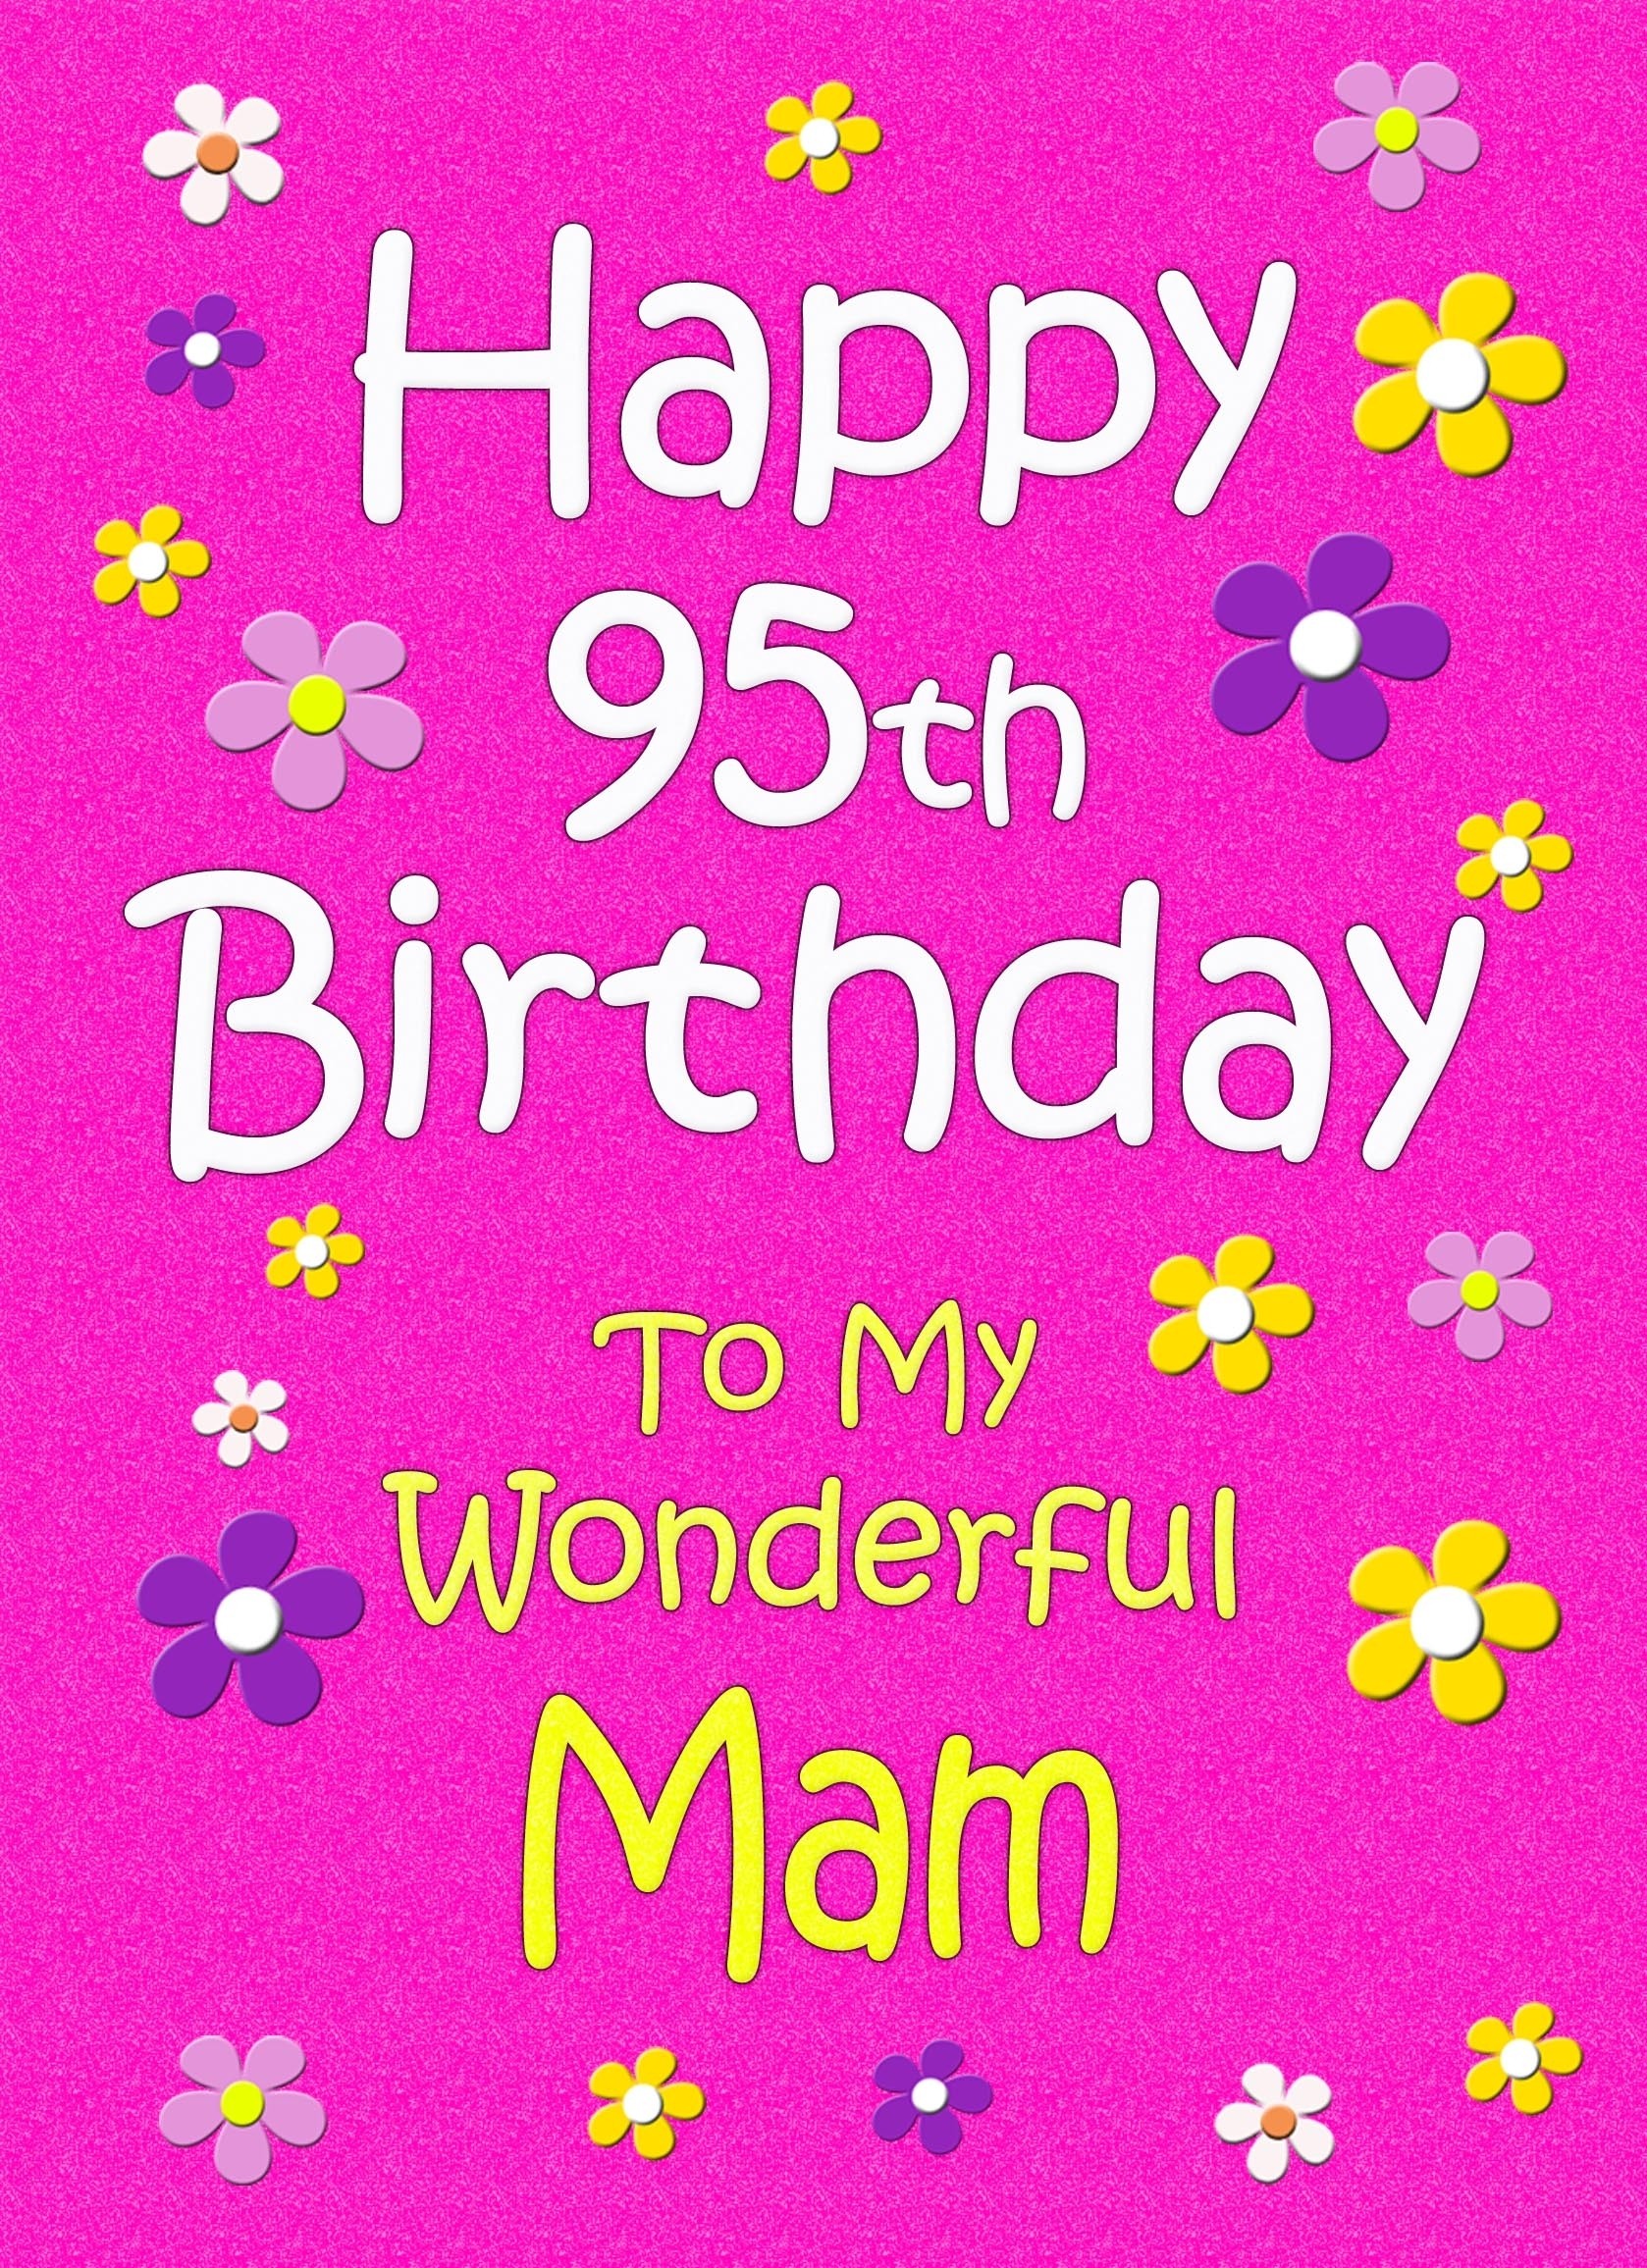 Mam 95th Birthday Card (Pink)